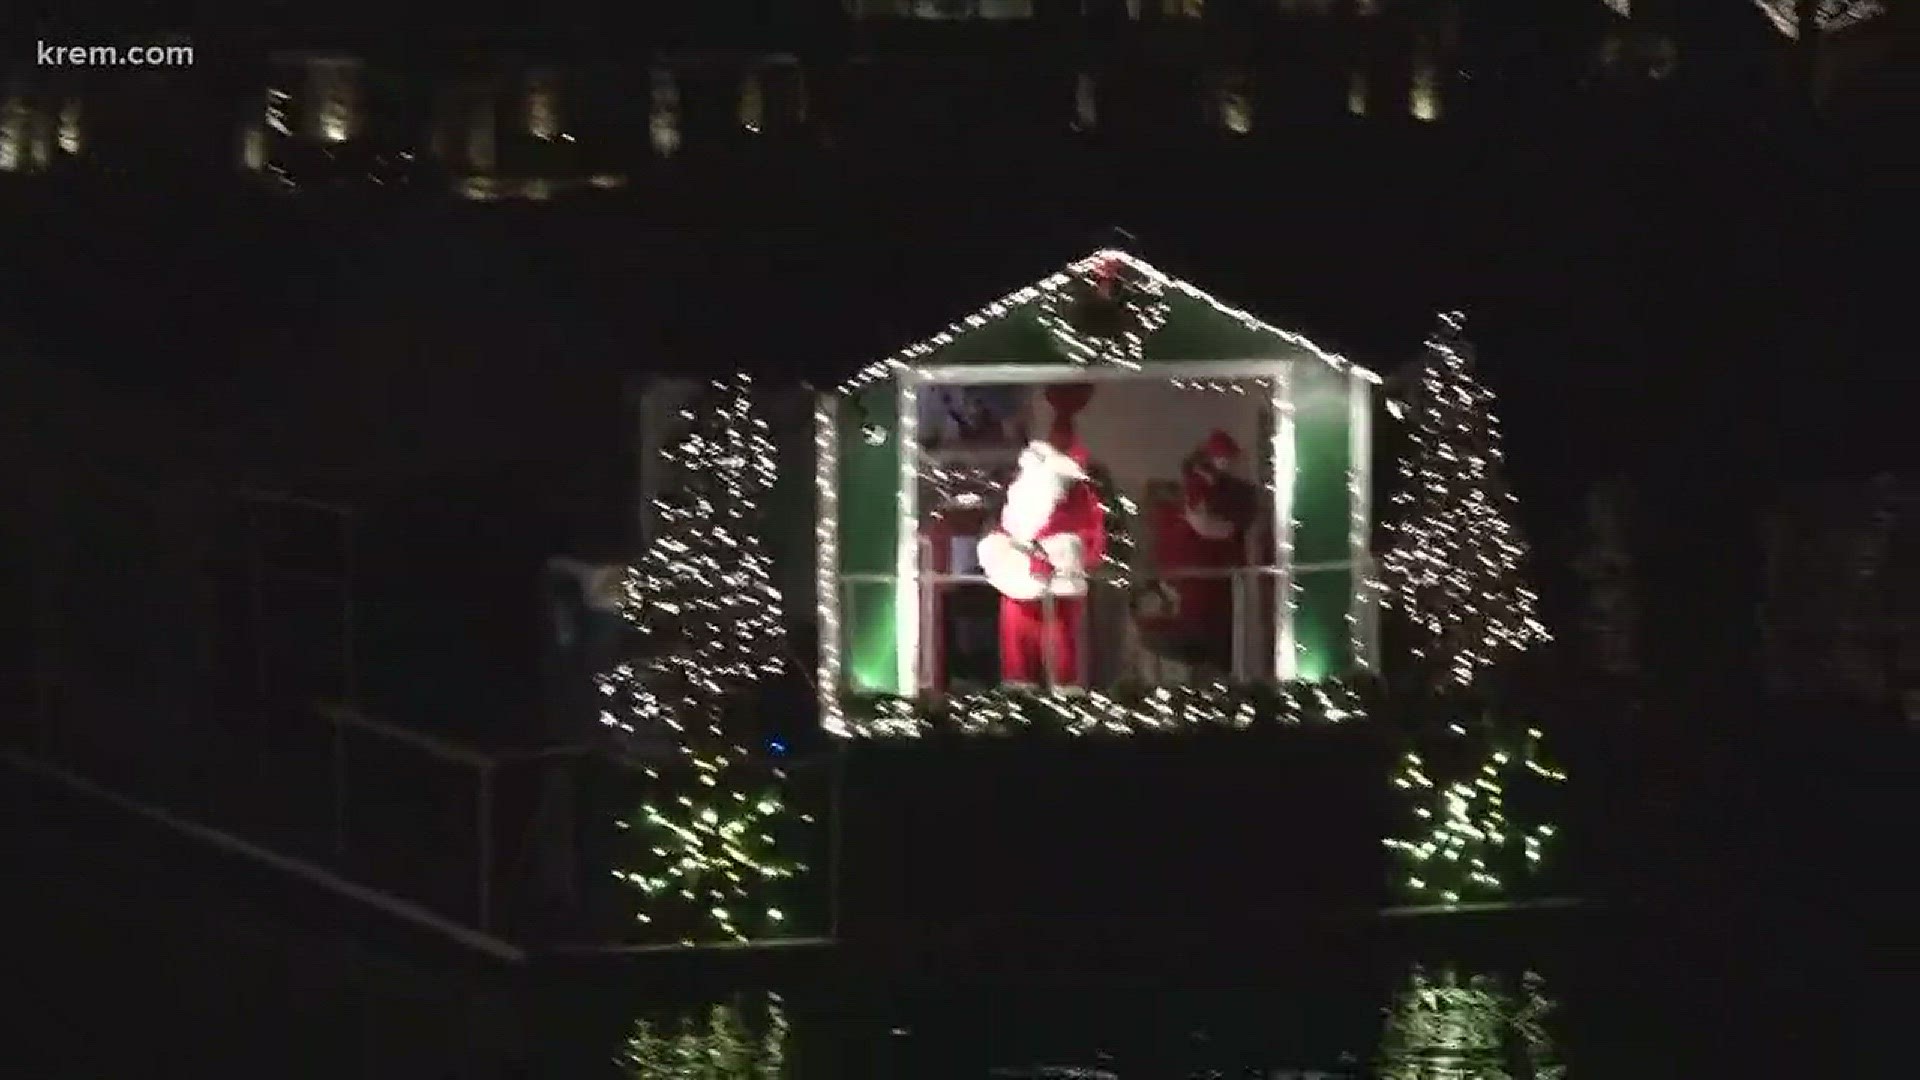 KREM 2's Evan Noorani took a trip to see the Holiday Lights Show in Coeur d'Alene.